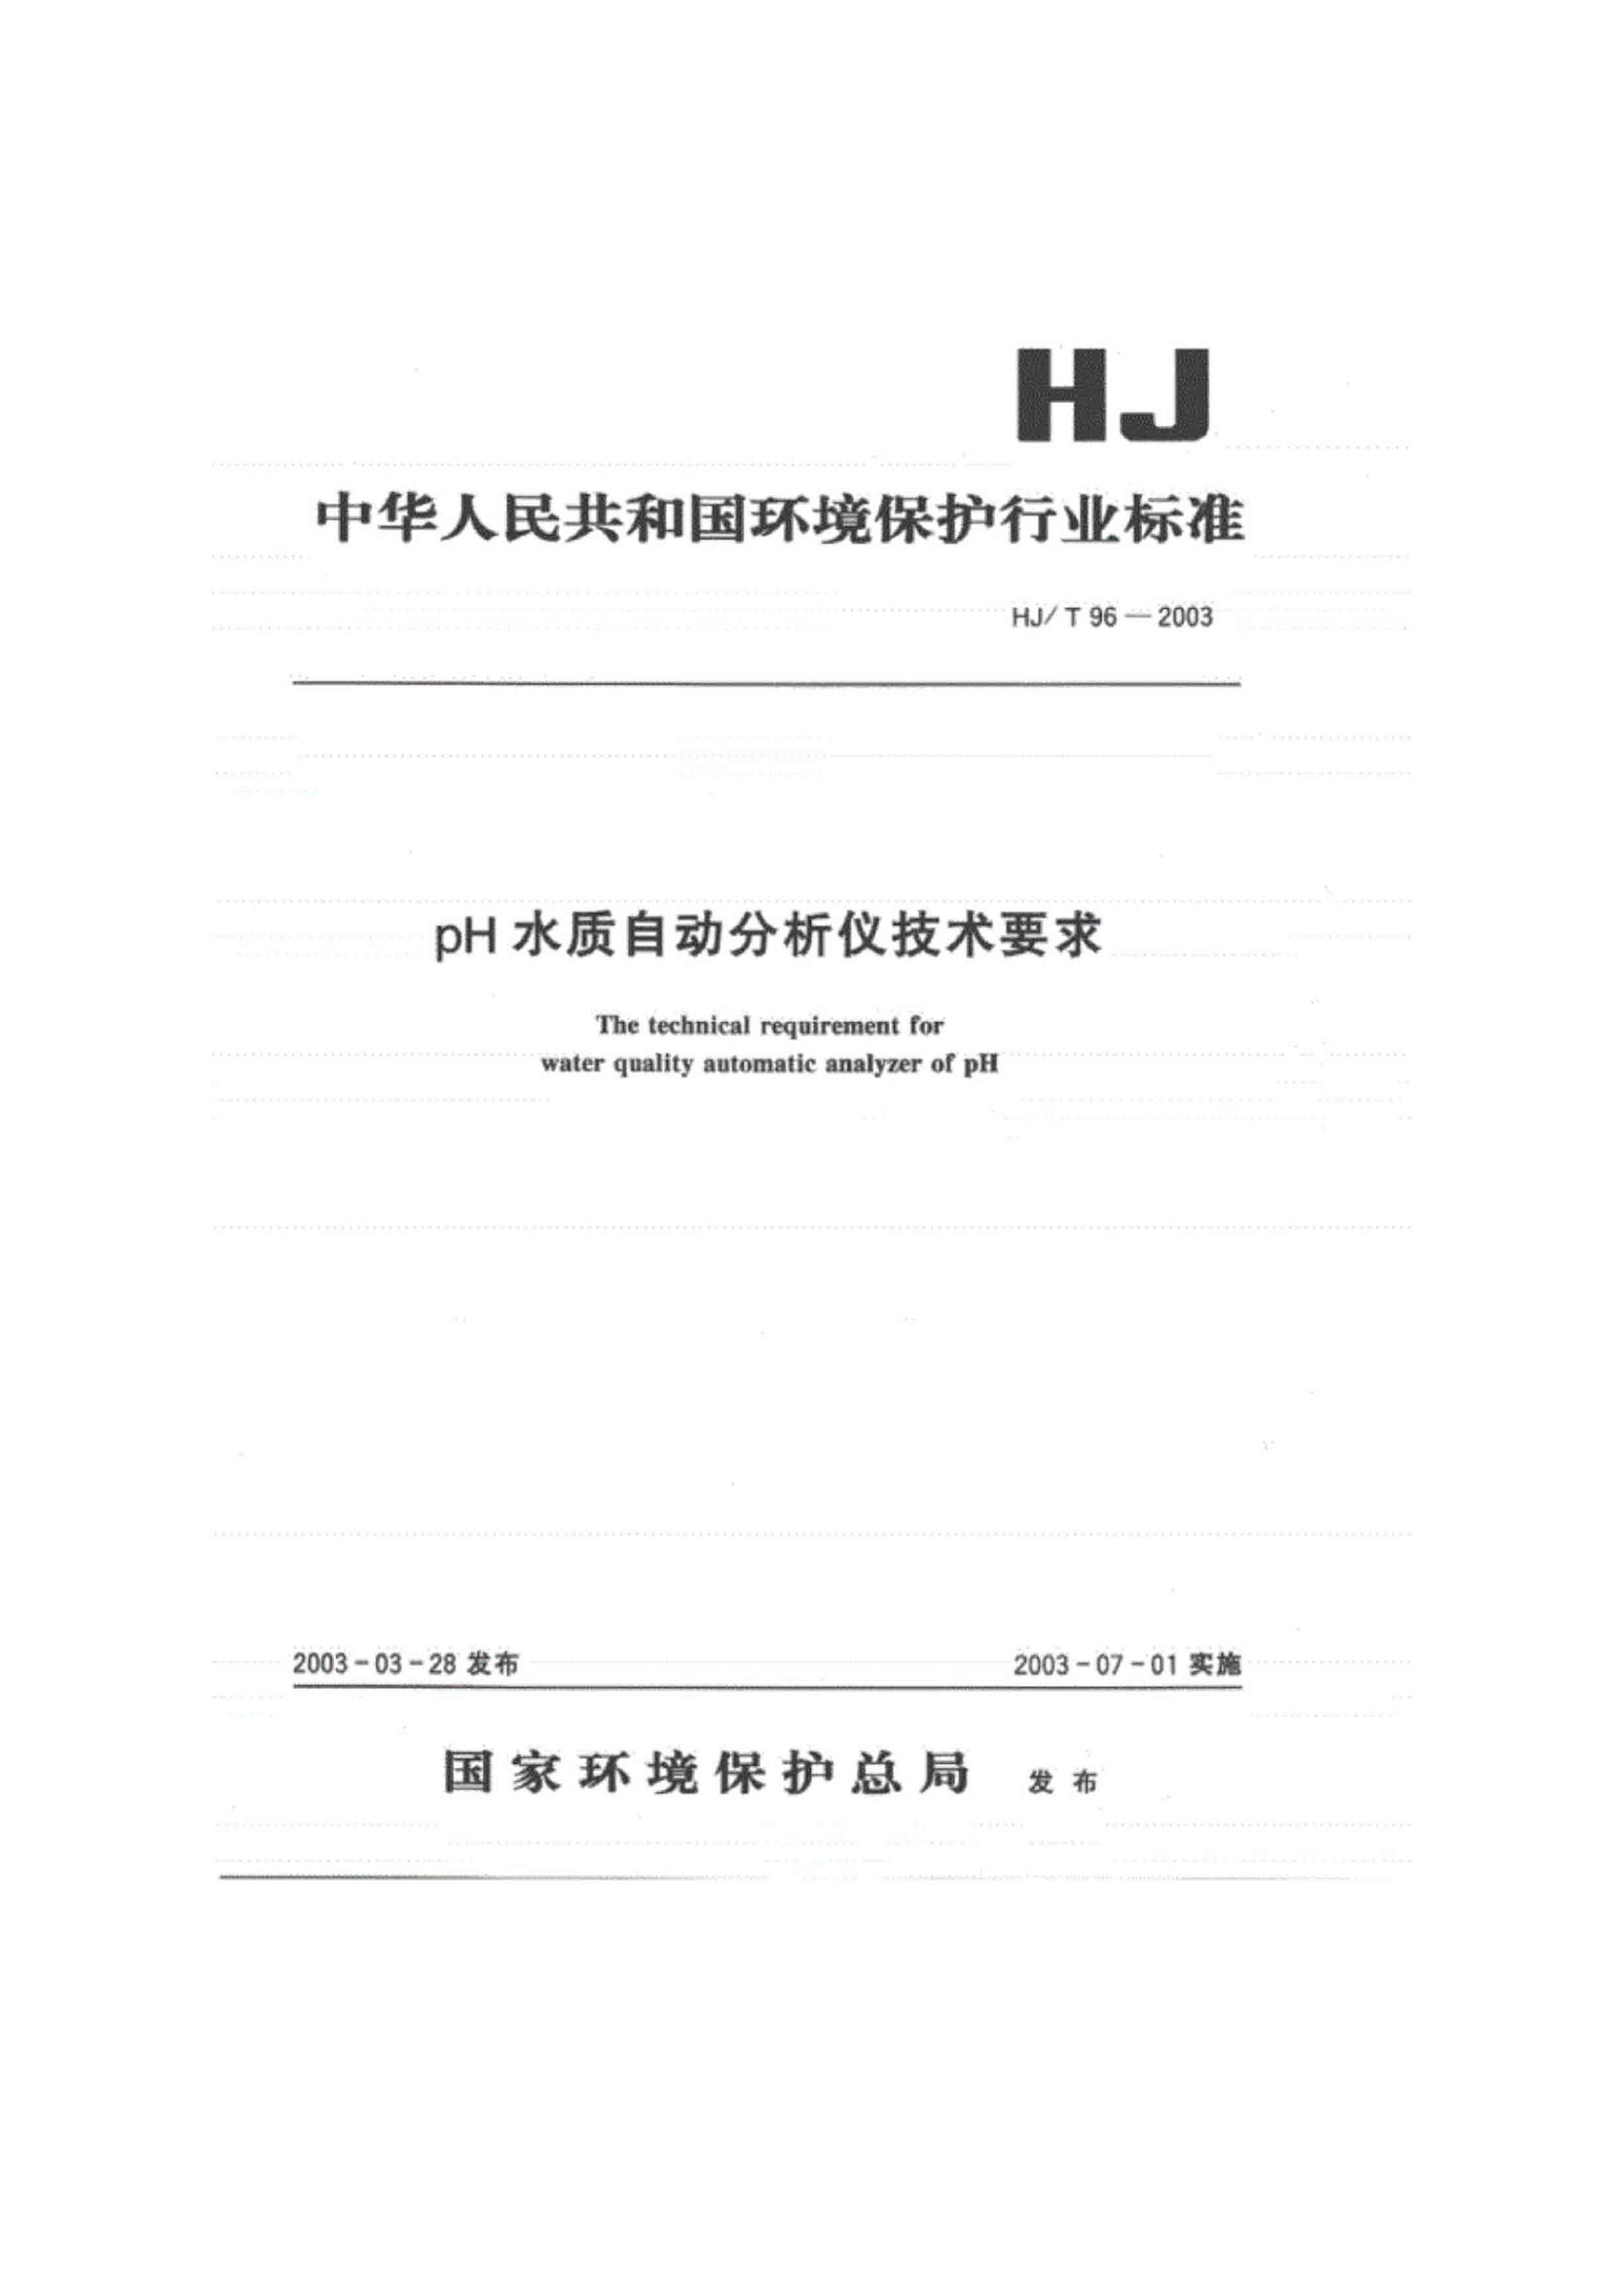 HJ-T96-2003 环境保护产品技术要求 pH水质自动分析仪技术要求 下载